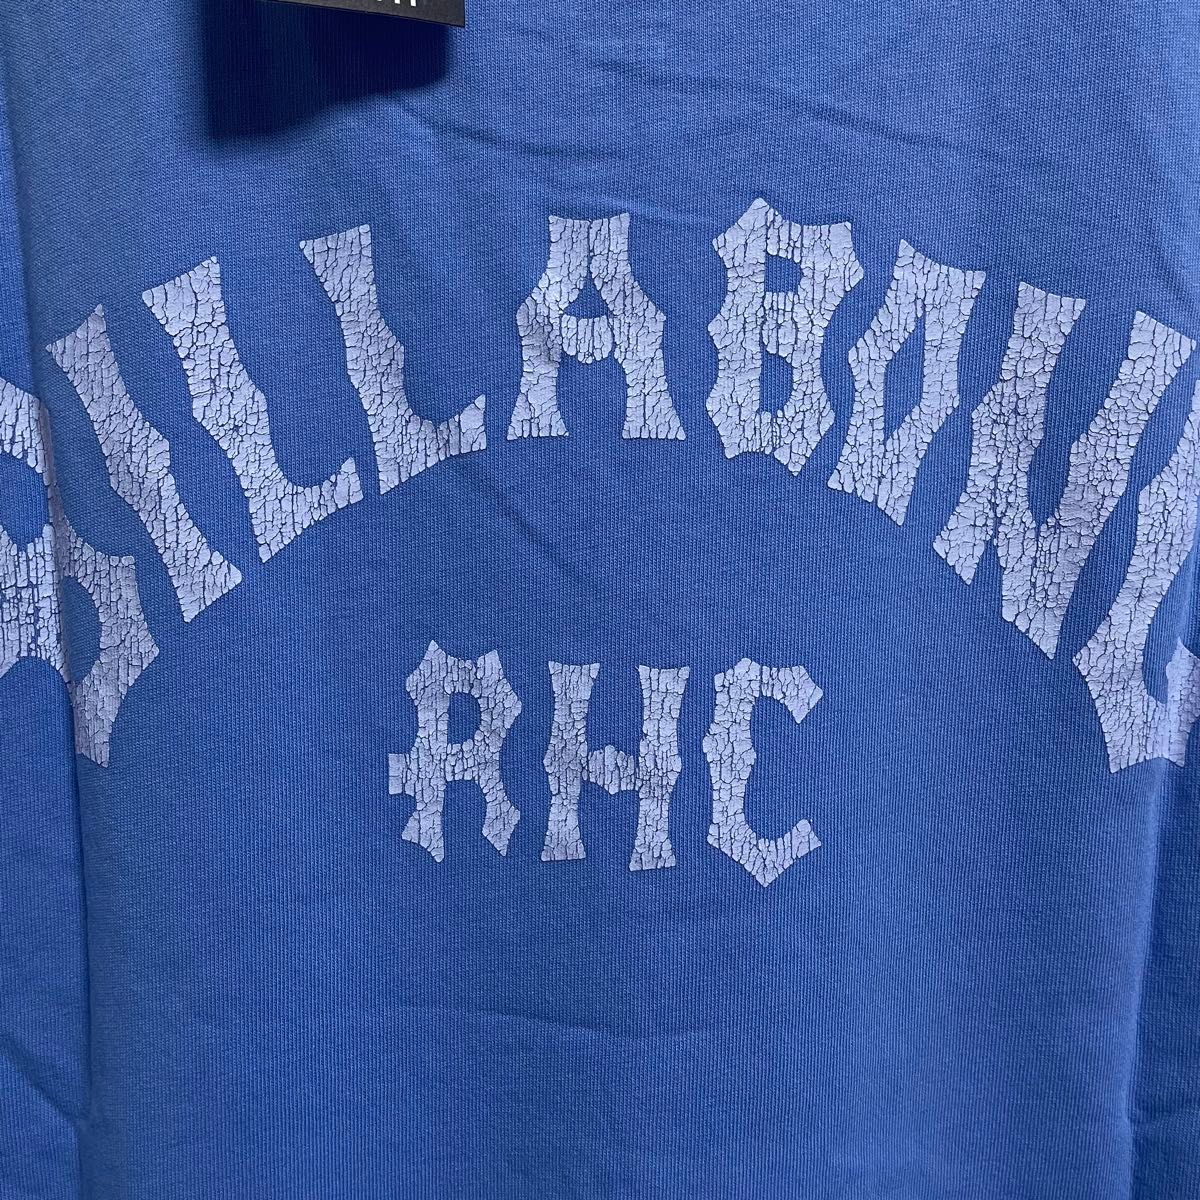 RHC × BILLABONG Logo Tee【L】ロゴティー 半袖Tシャツ ブルー ビラボン ロンハーマン 別注 ポケットT